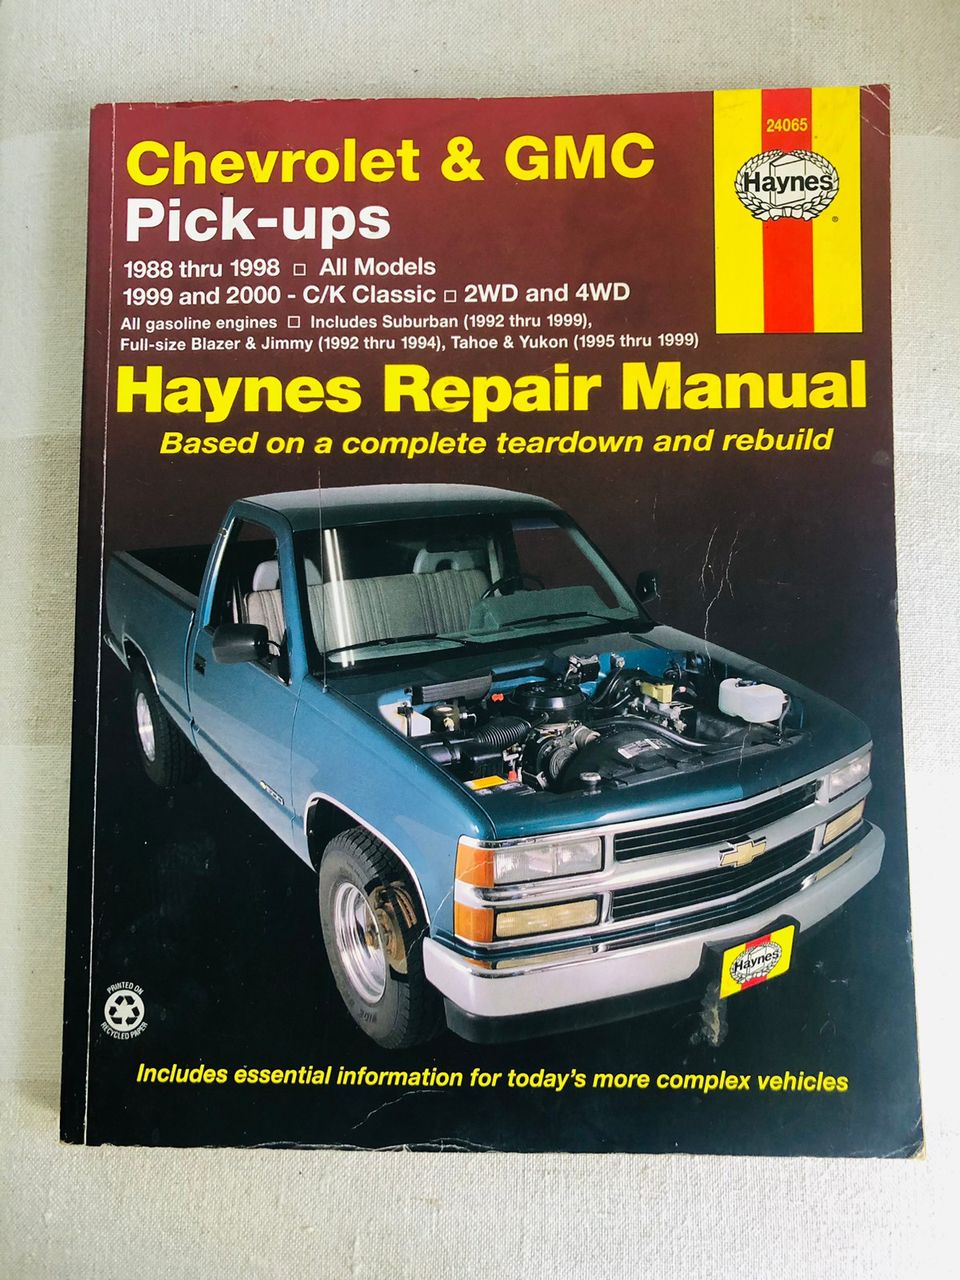 Chevrolet & GMC Pickups korjauskäsikirja, Haynes